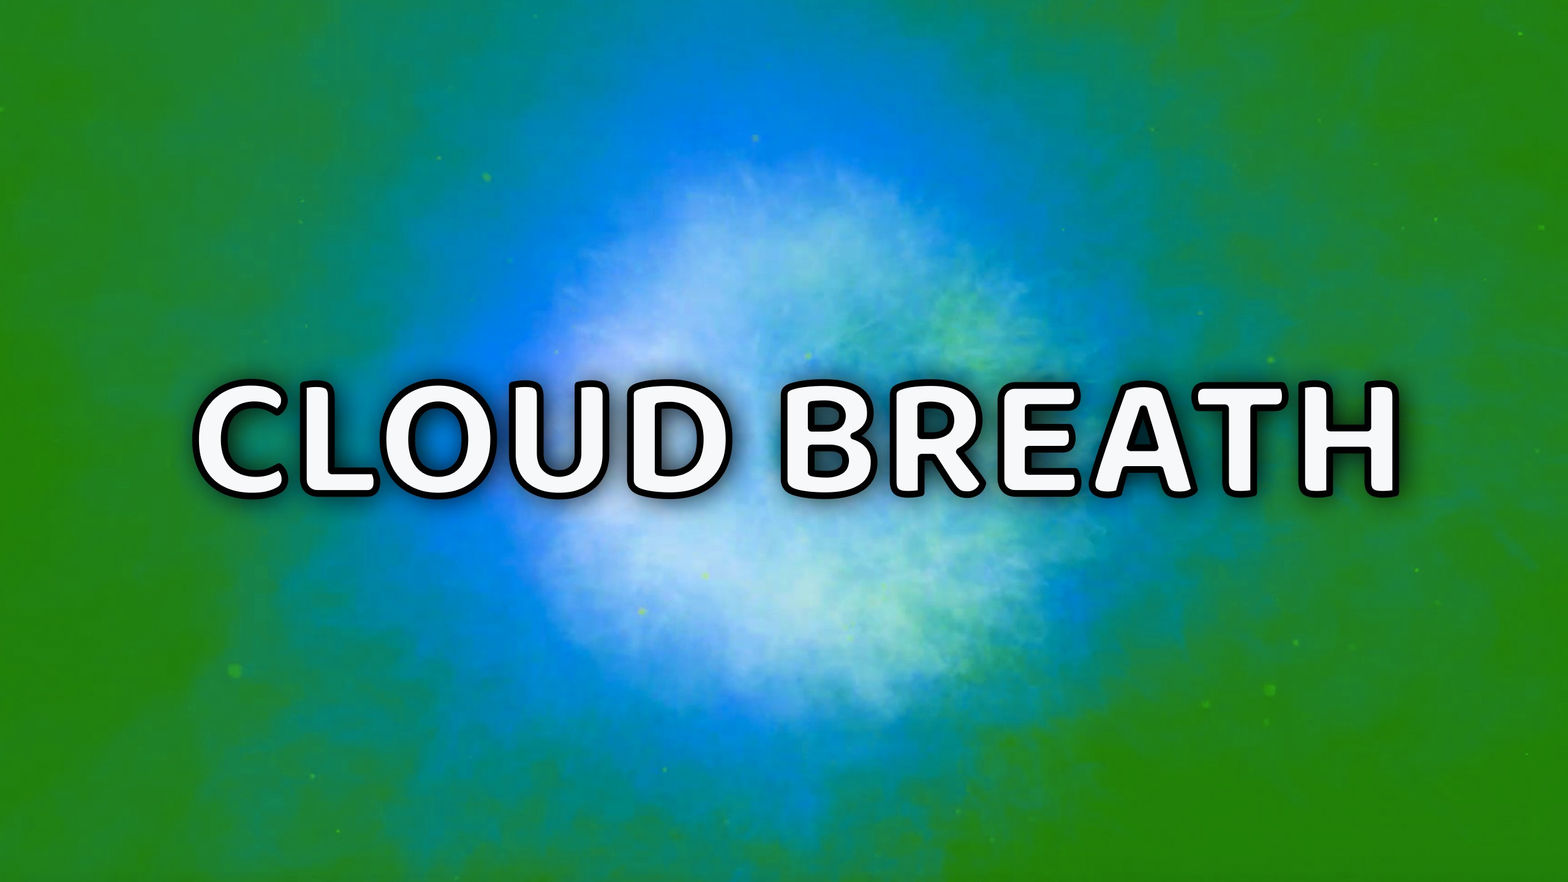 Cloud Breath